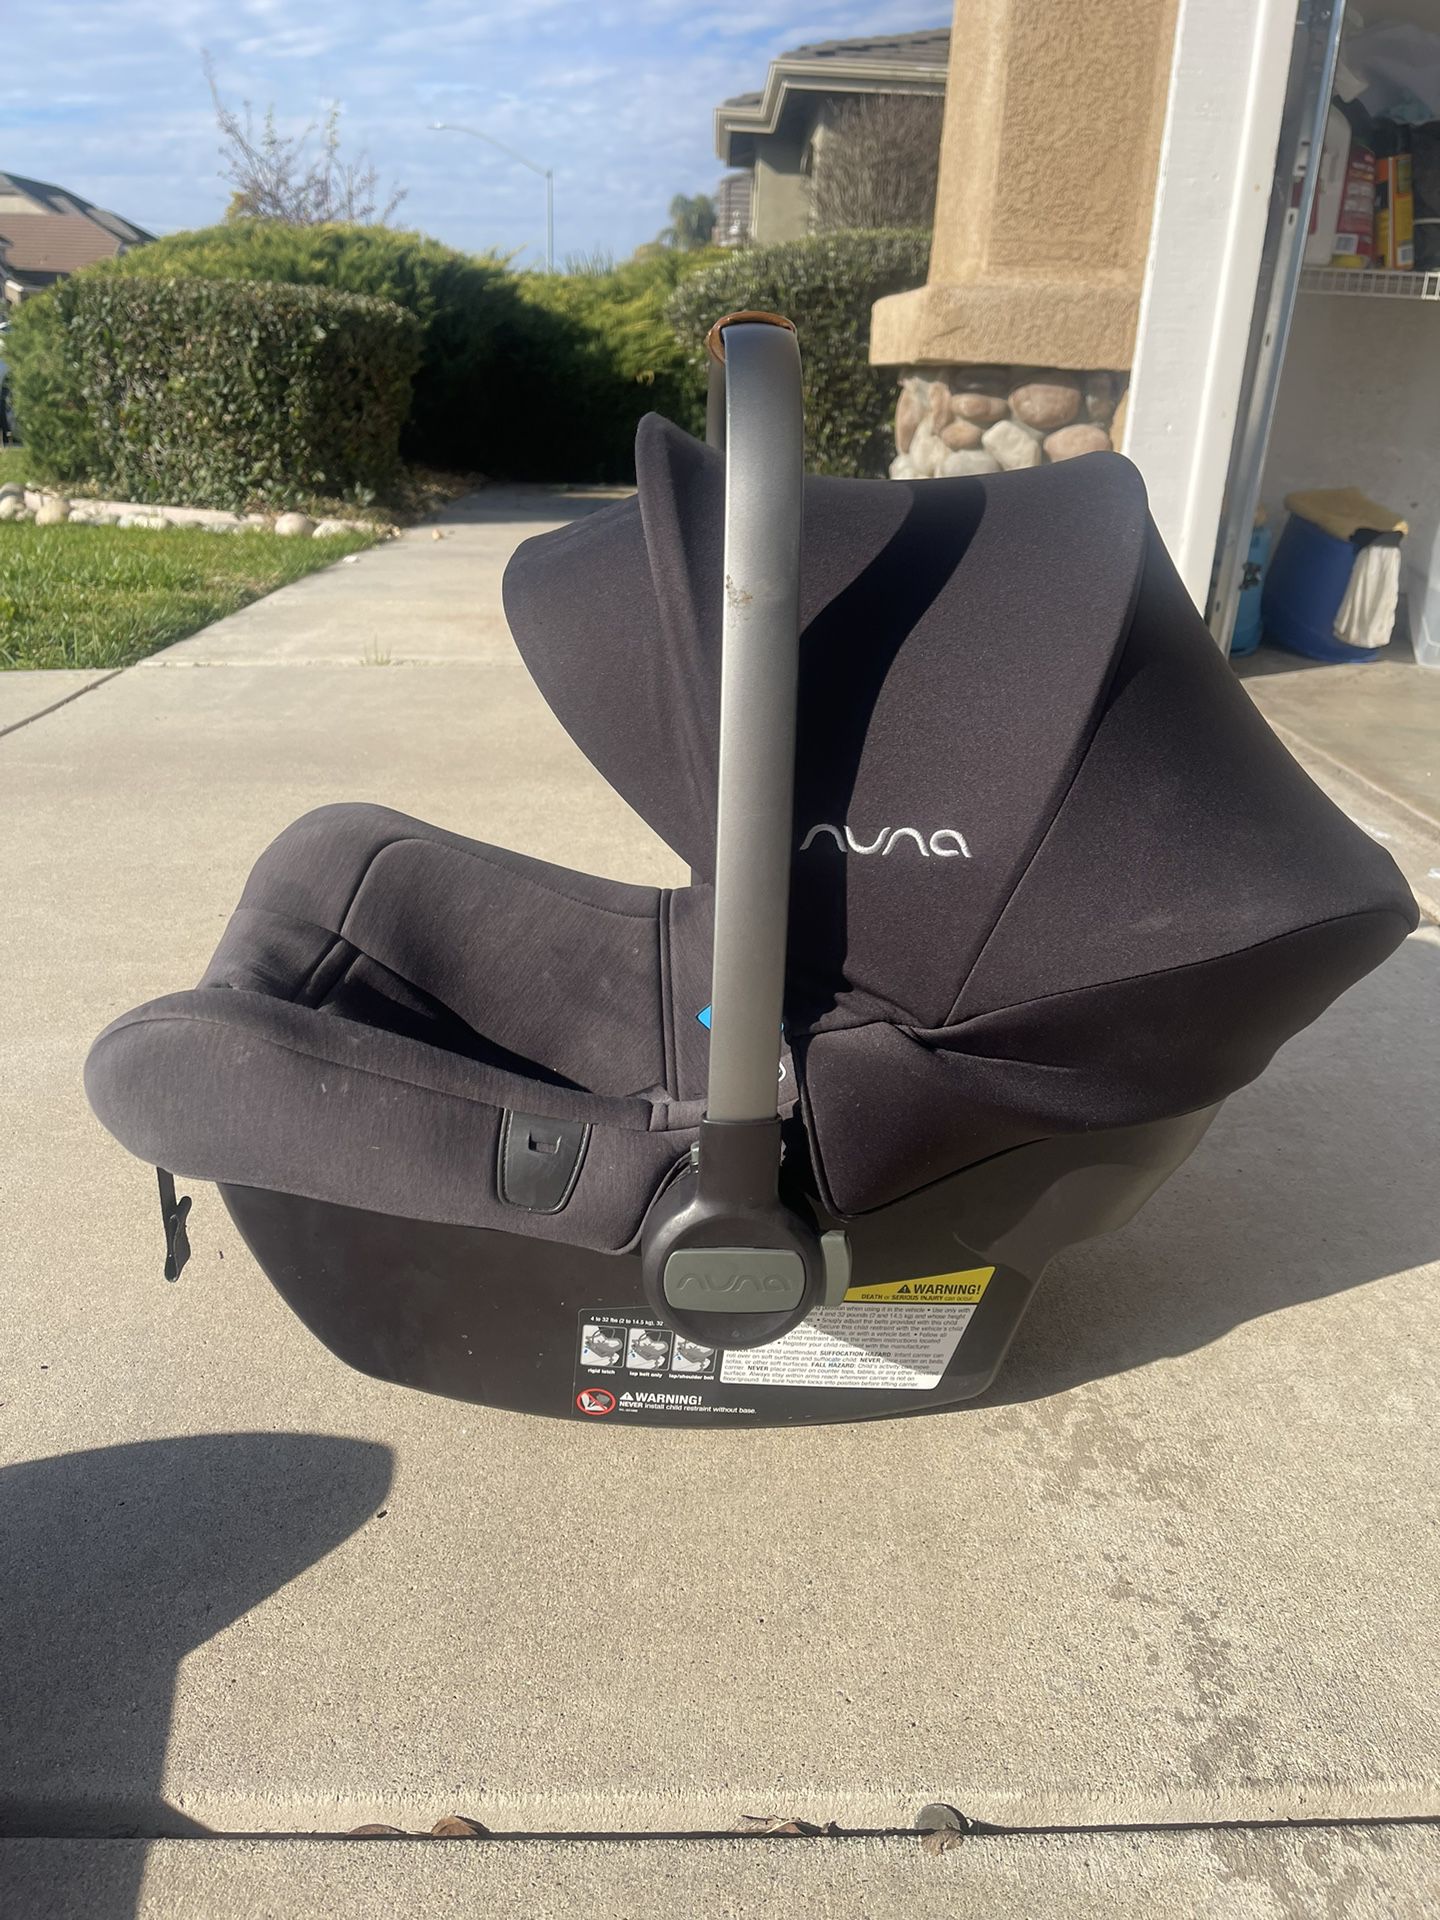 Nuna Pipa Lite Infant Car Seat With Base